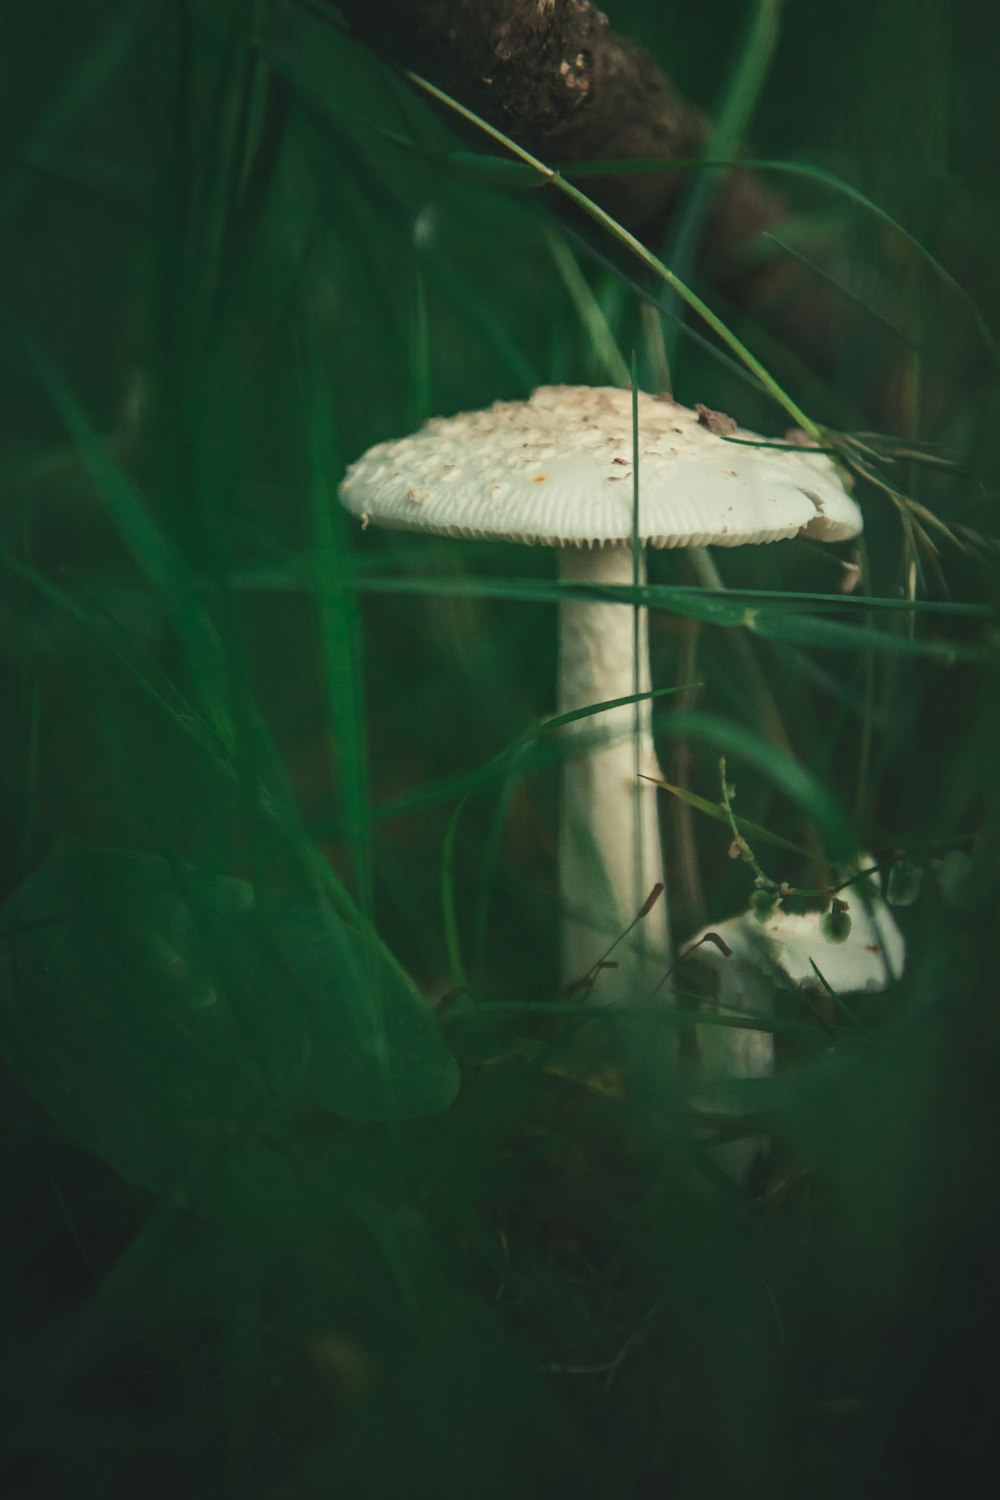 white mushroom in grassy field